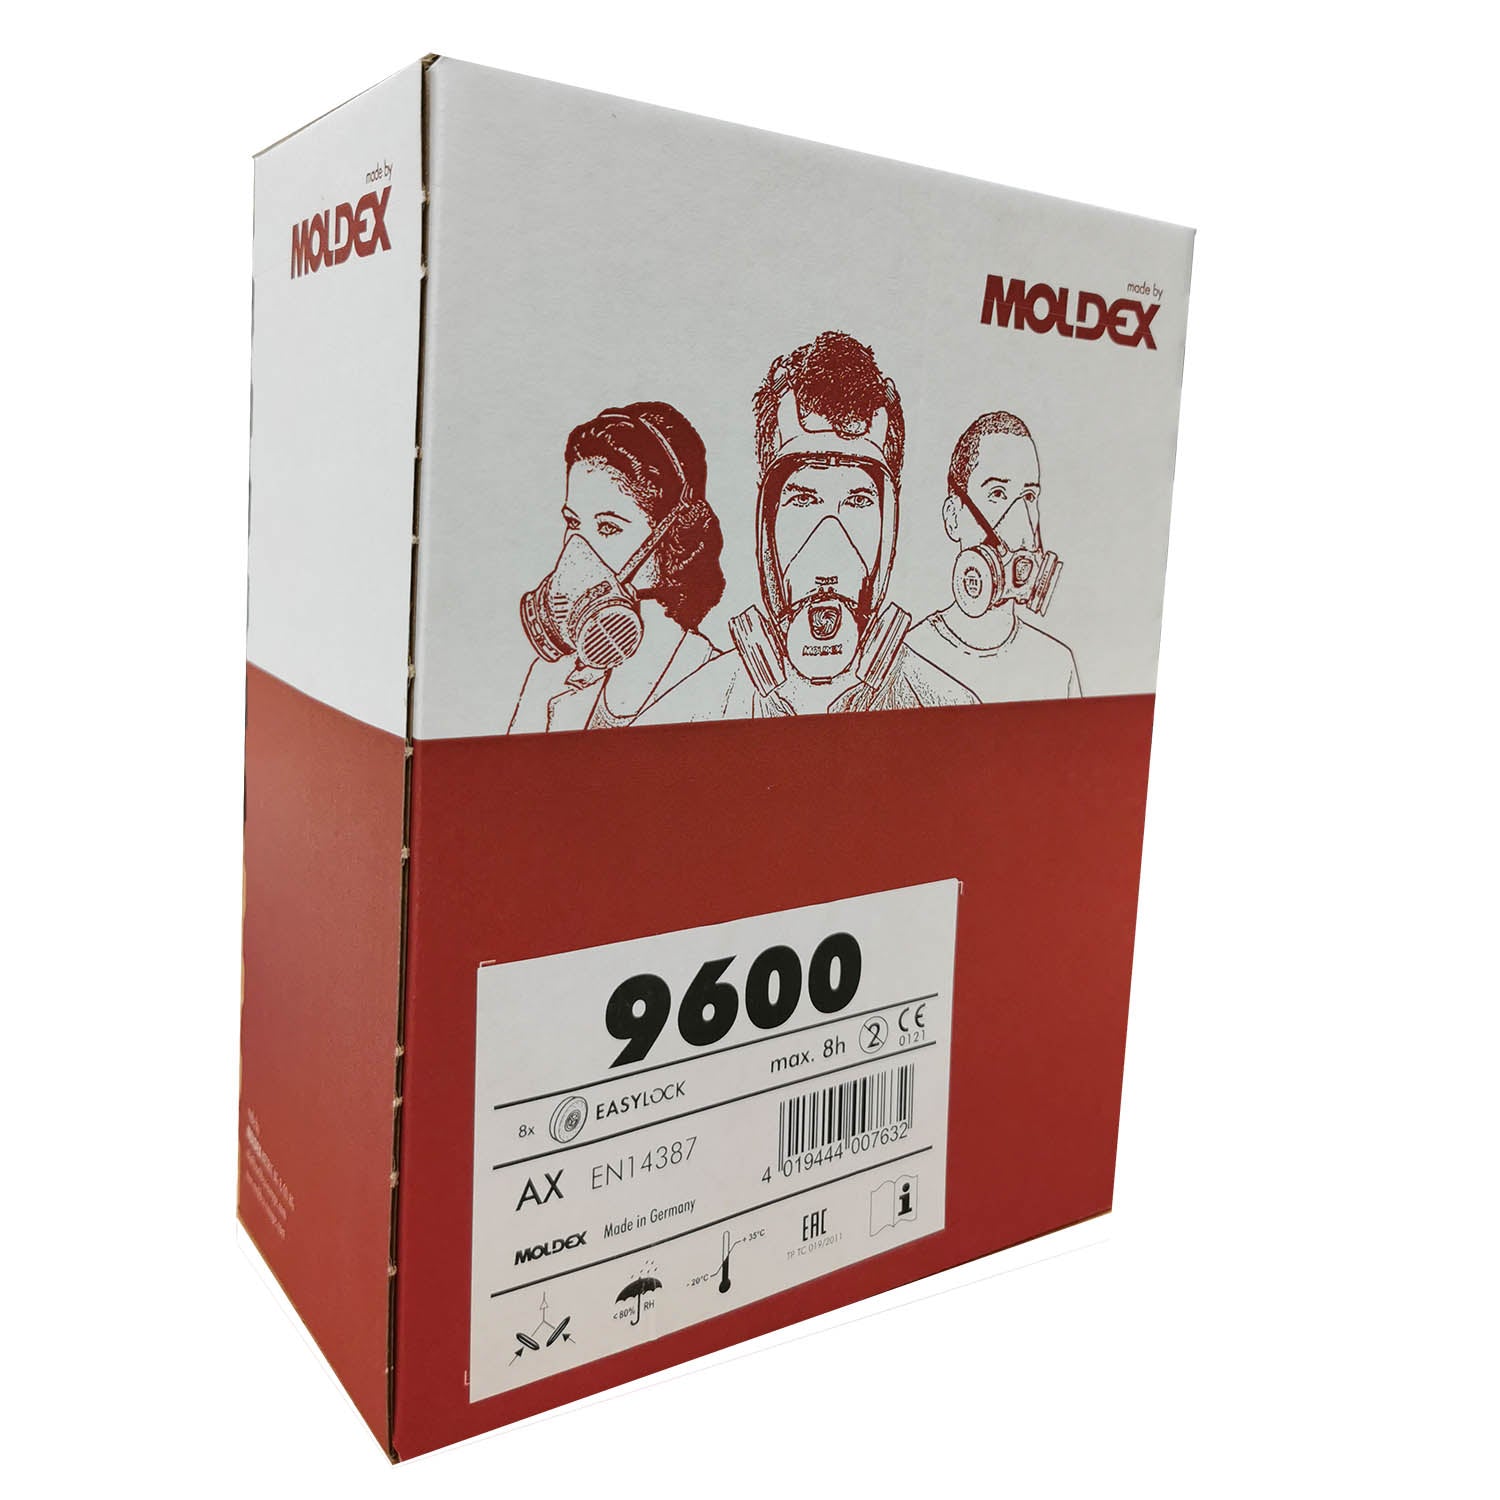 Moldex 9600 AX Gas filter box